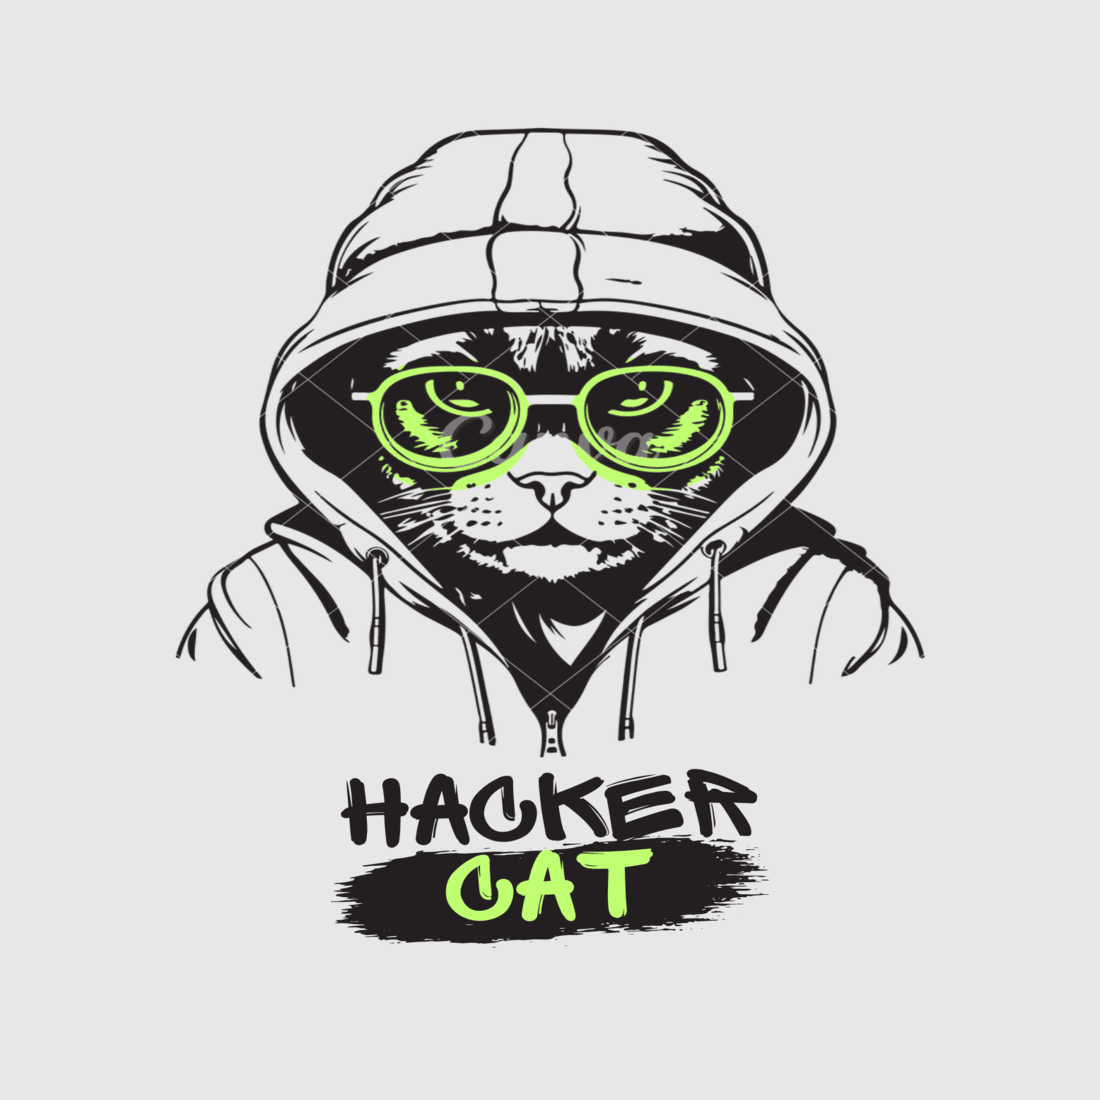 Hacker Cat T-shirt design preview image.